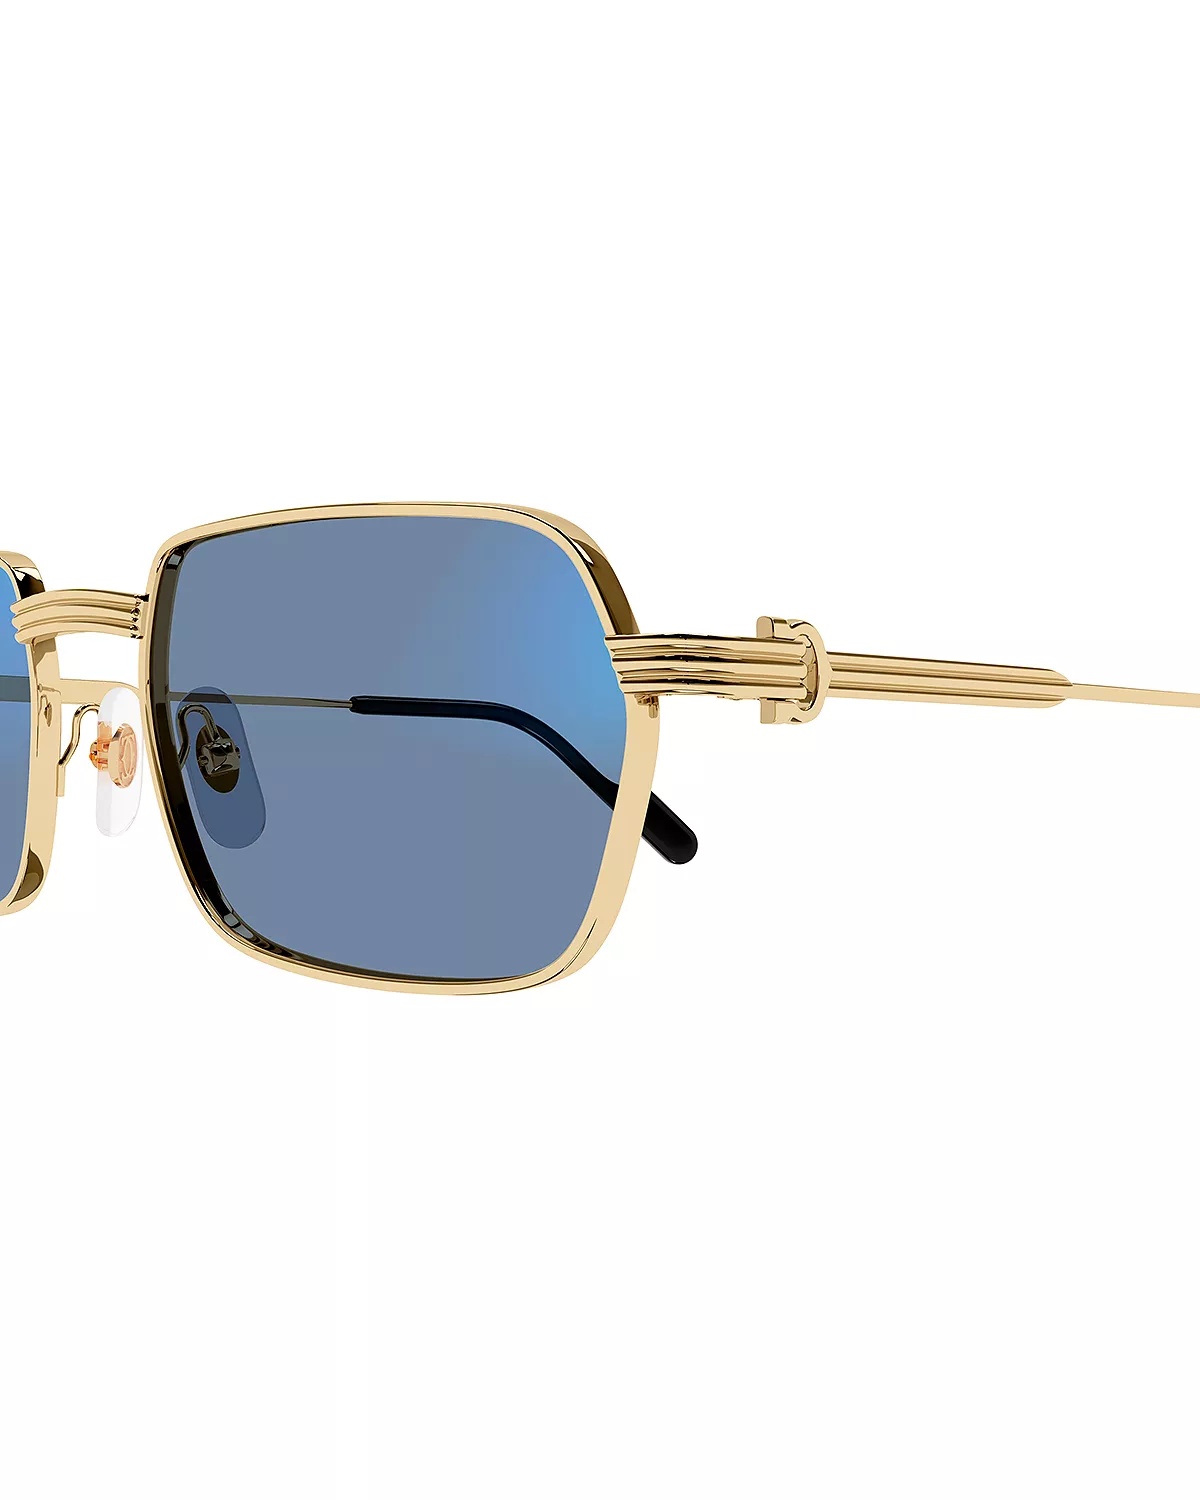 Premiere De Cartier 24 Carat Gold Plated Photochromatic Rectangular Sunglasses, 56mm - 8